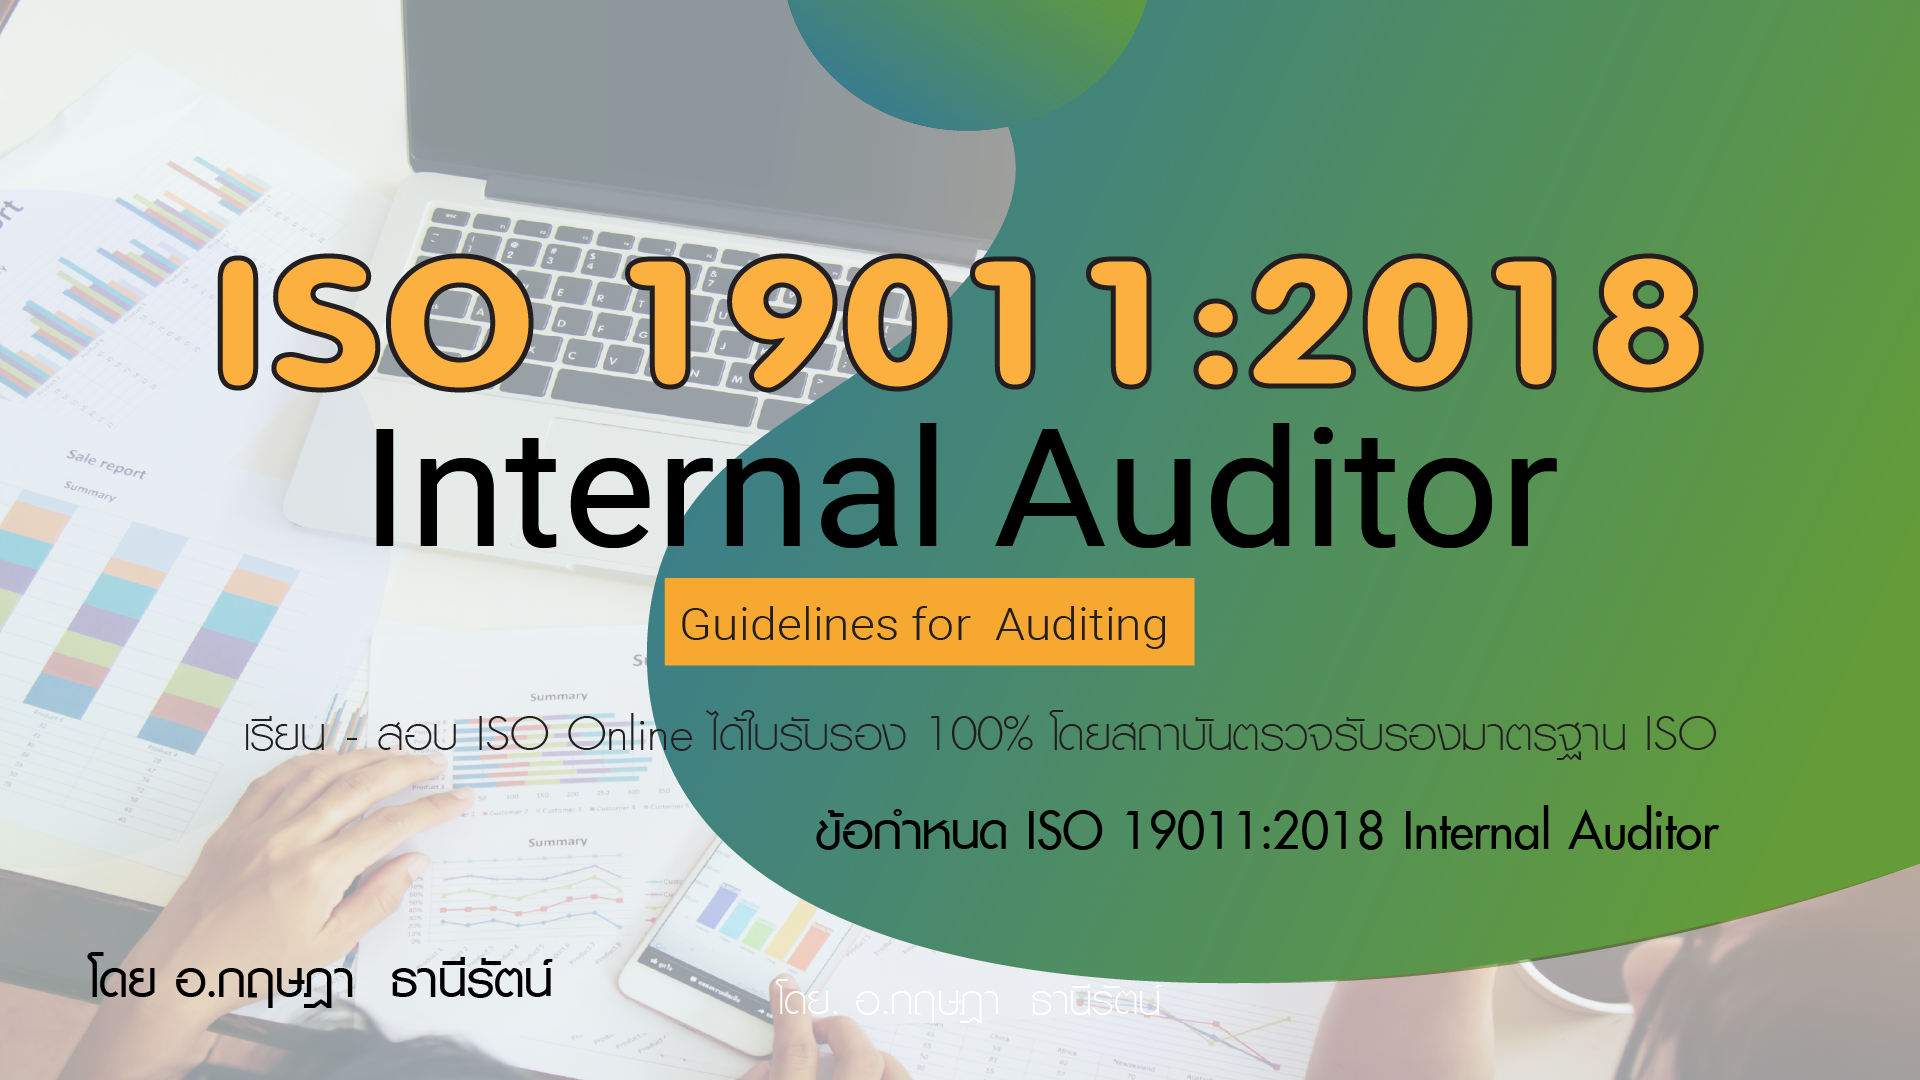 ISO 19011:2018 Internal Auditor